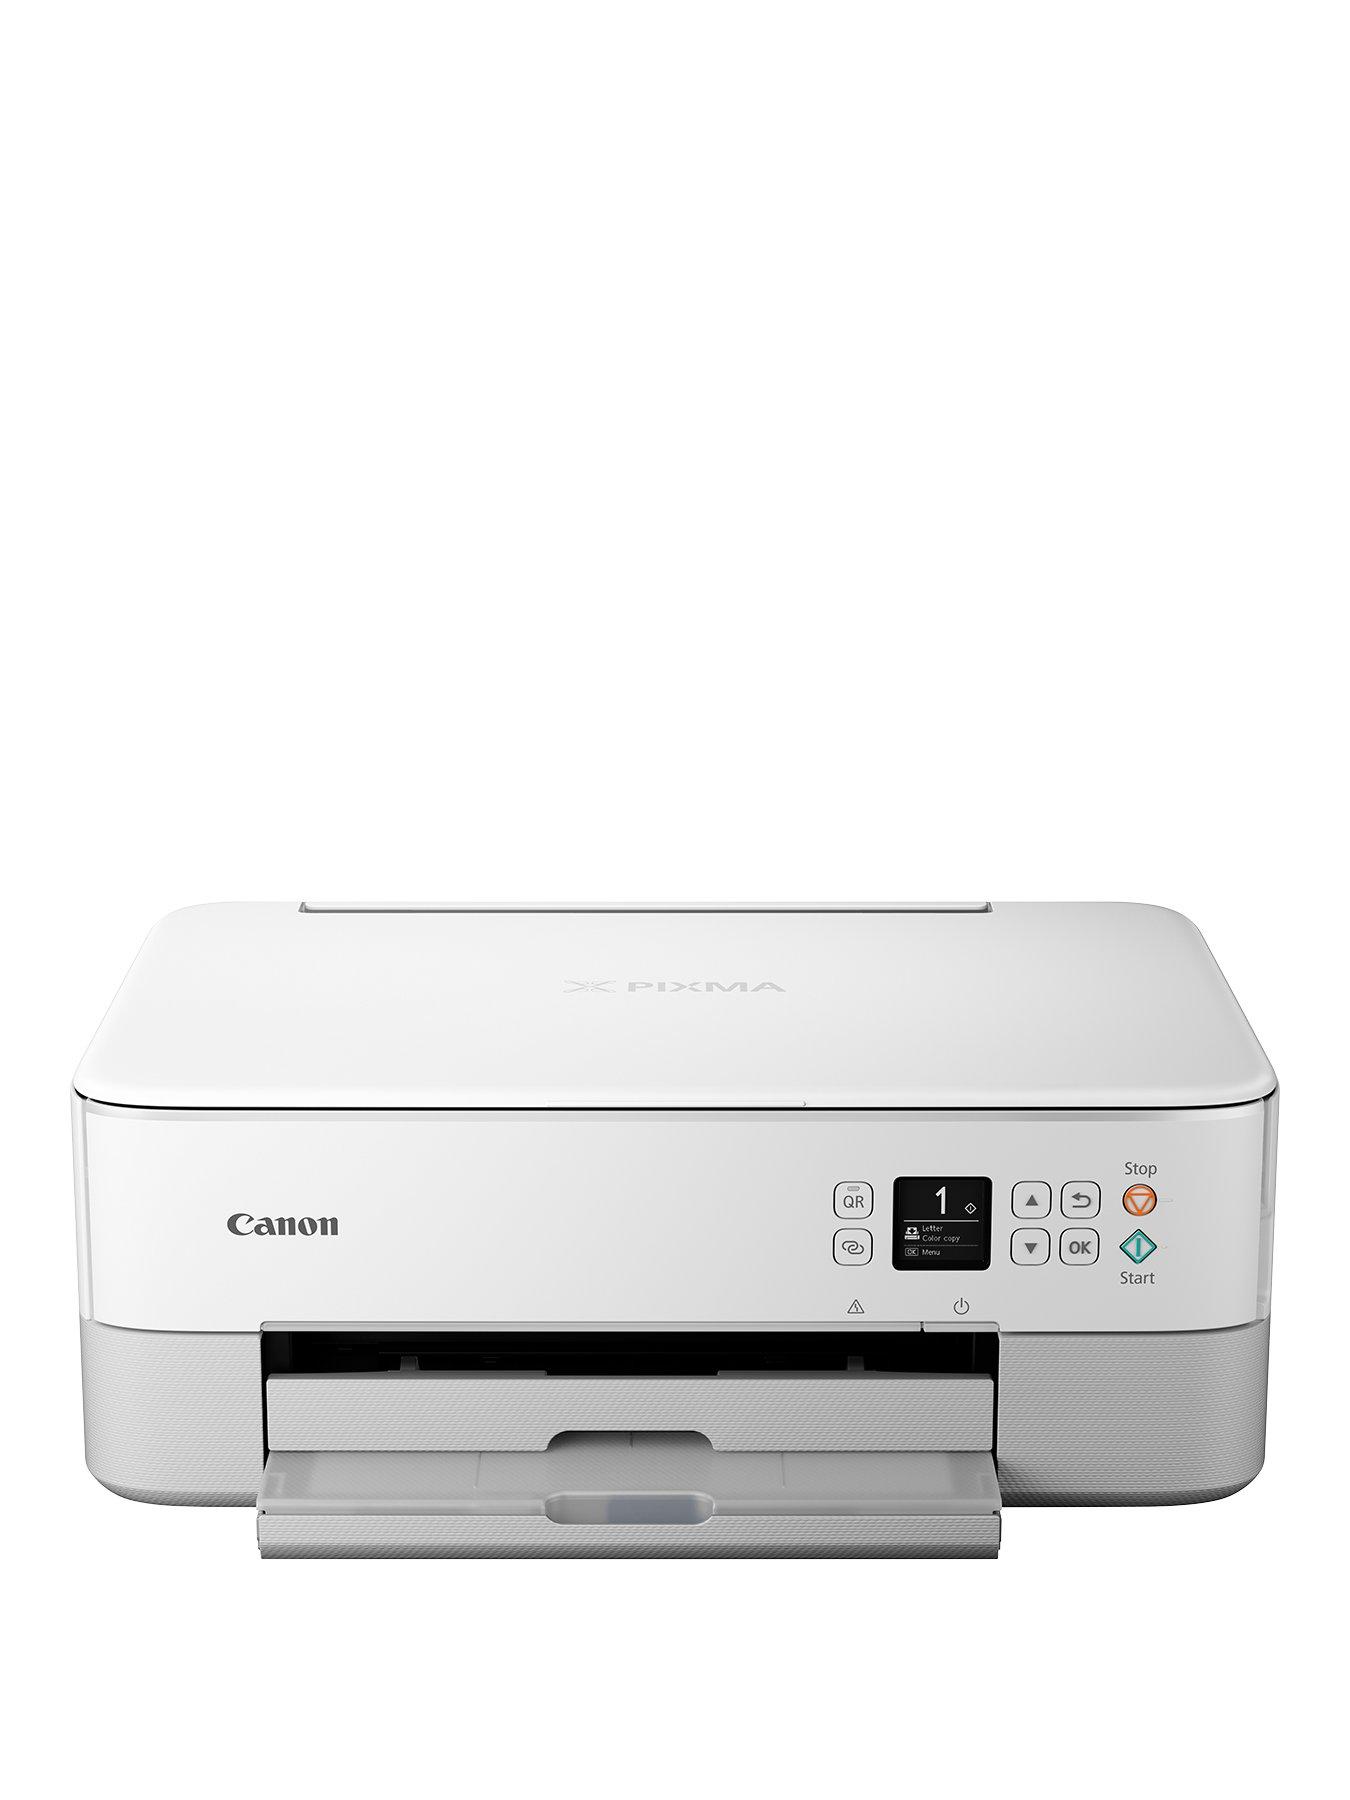 PIXMA TS3550i 3-In-1 Wireless Home Office Printer, Copier, & Scanner - PIXMA  Print Plan Compatible - Borderless Photo Printing - Wireless & Smartphone  Print/Scan via Cloud Storage (Black) : : Computers 